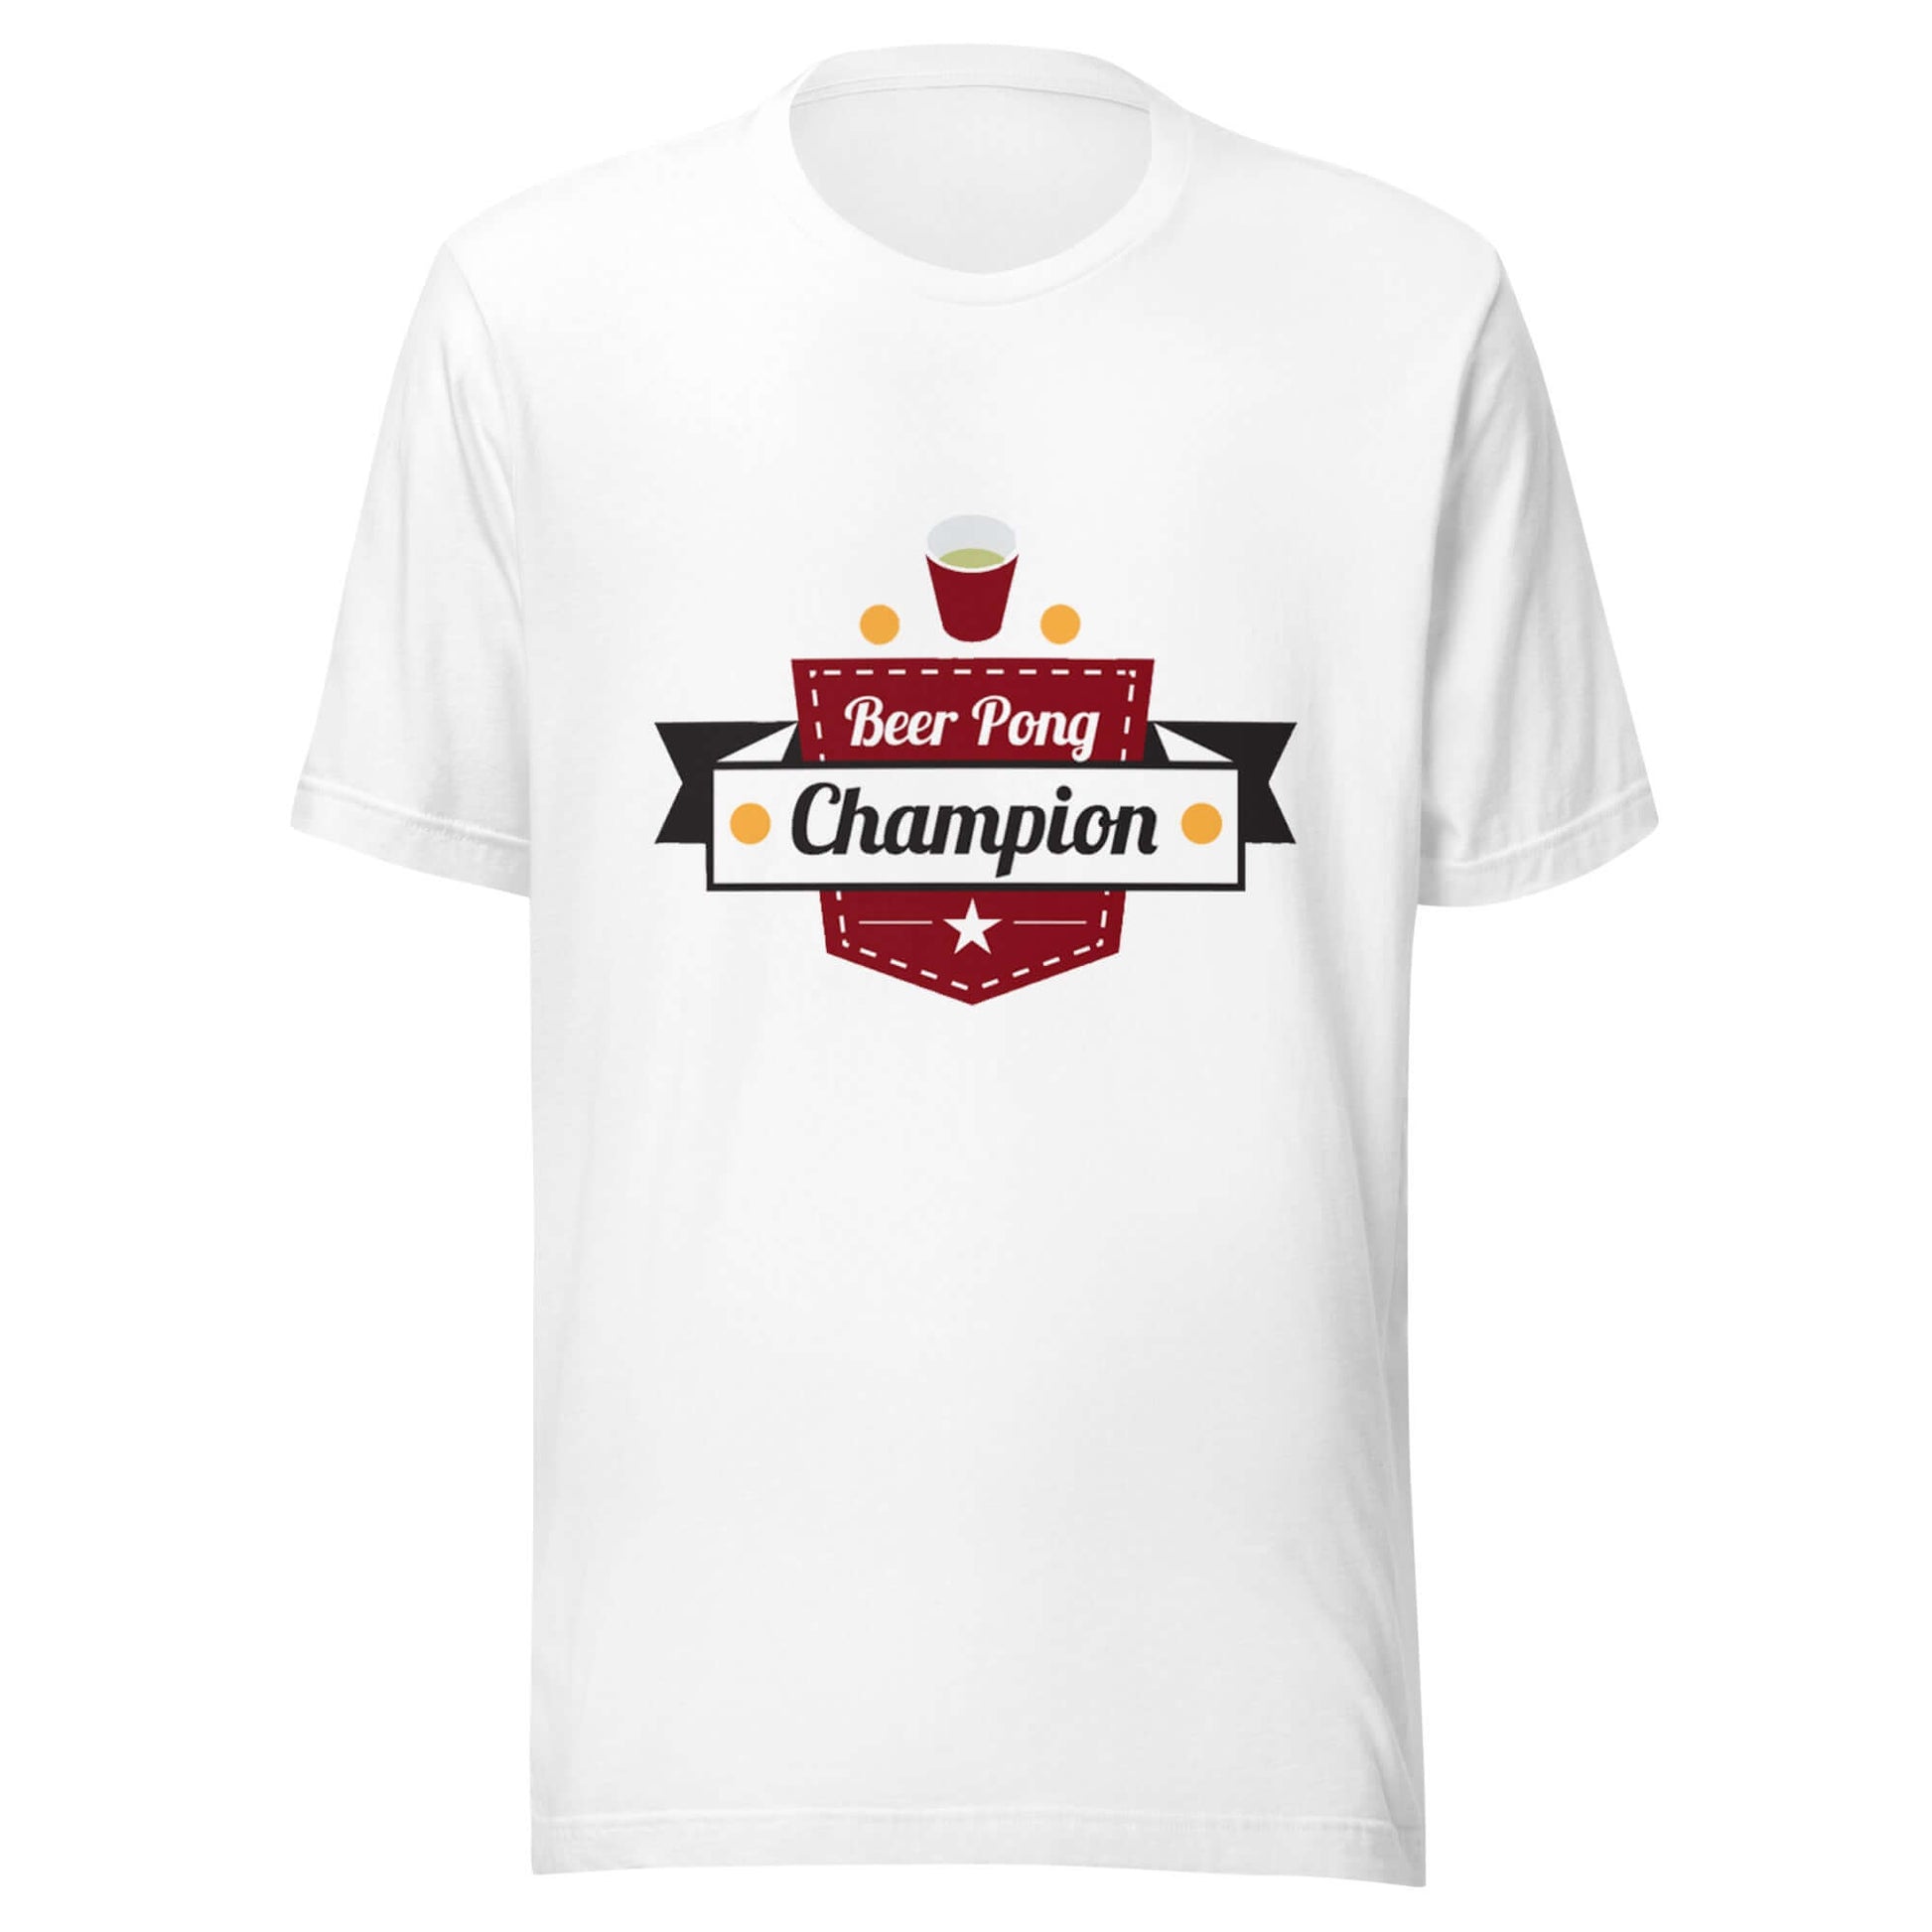 Beer Pong Champion - Unisex t-shirt - White